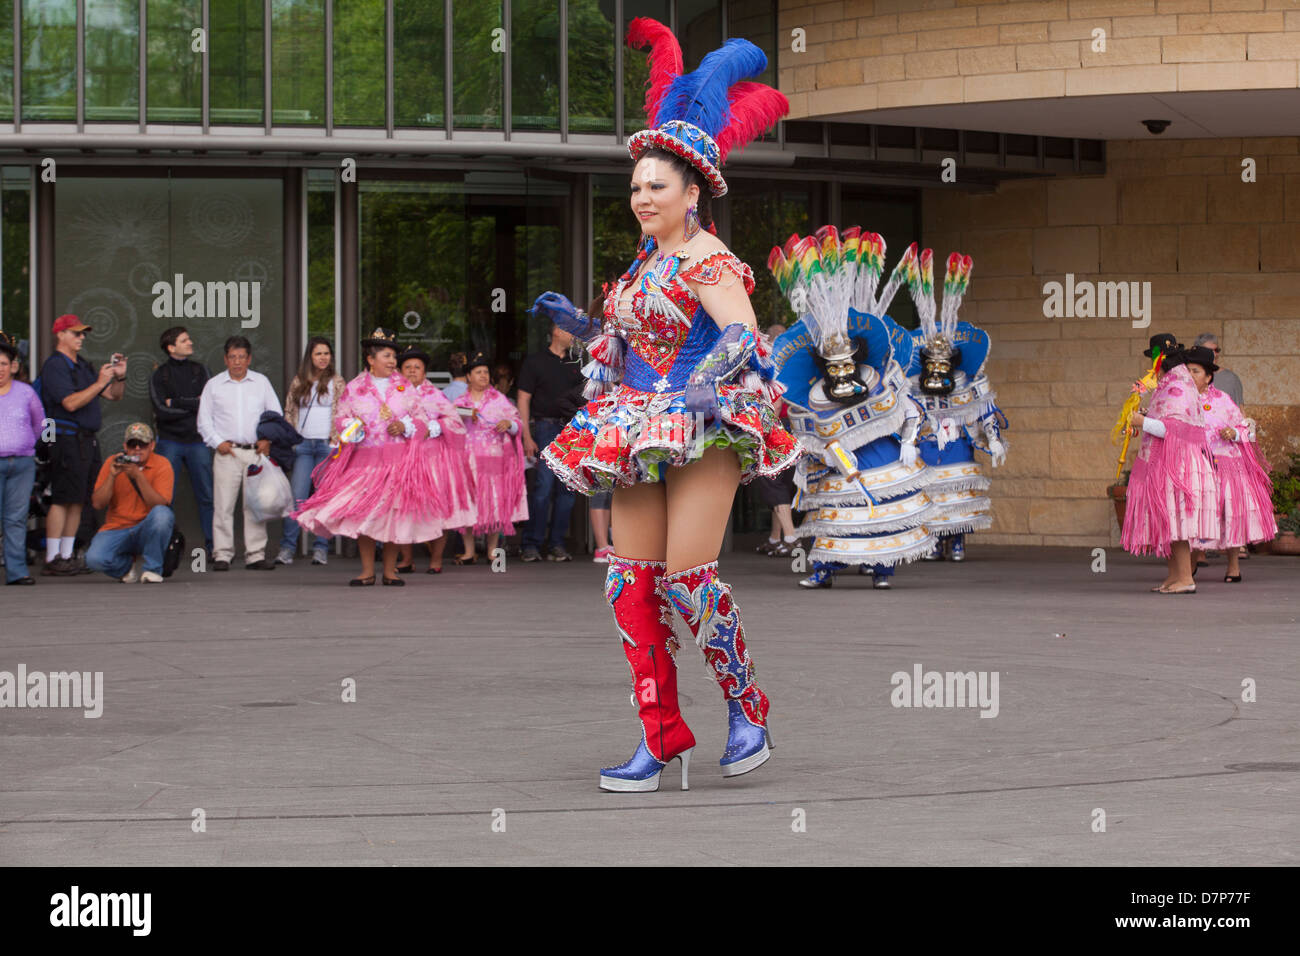 Bolivien traditionnel dancers performing - Washington, DC USA Banque D'Images